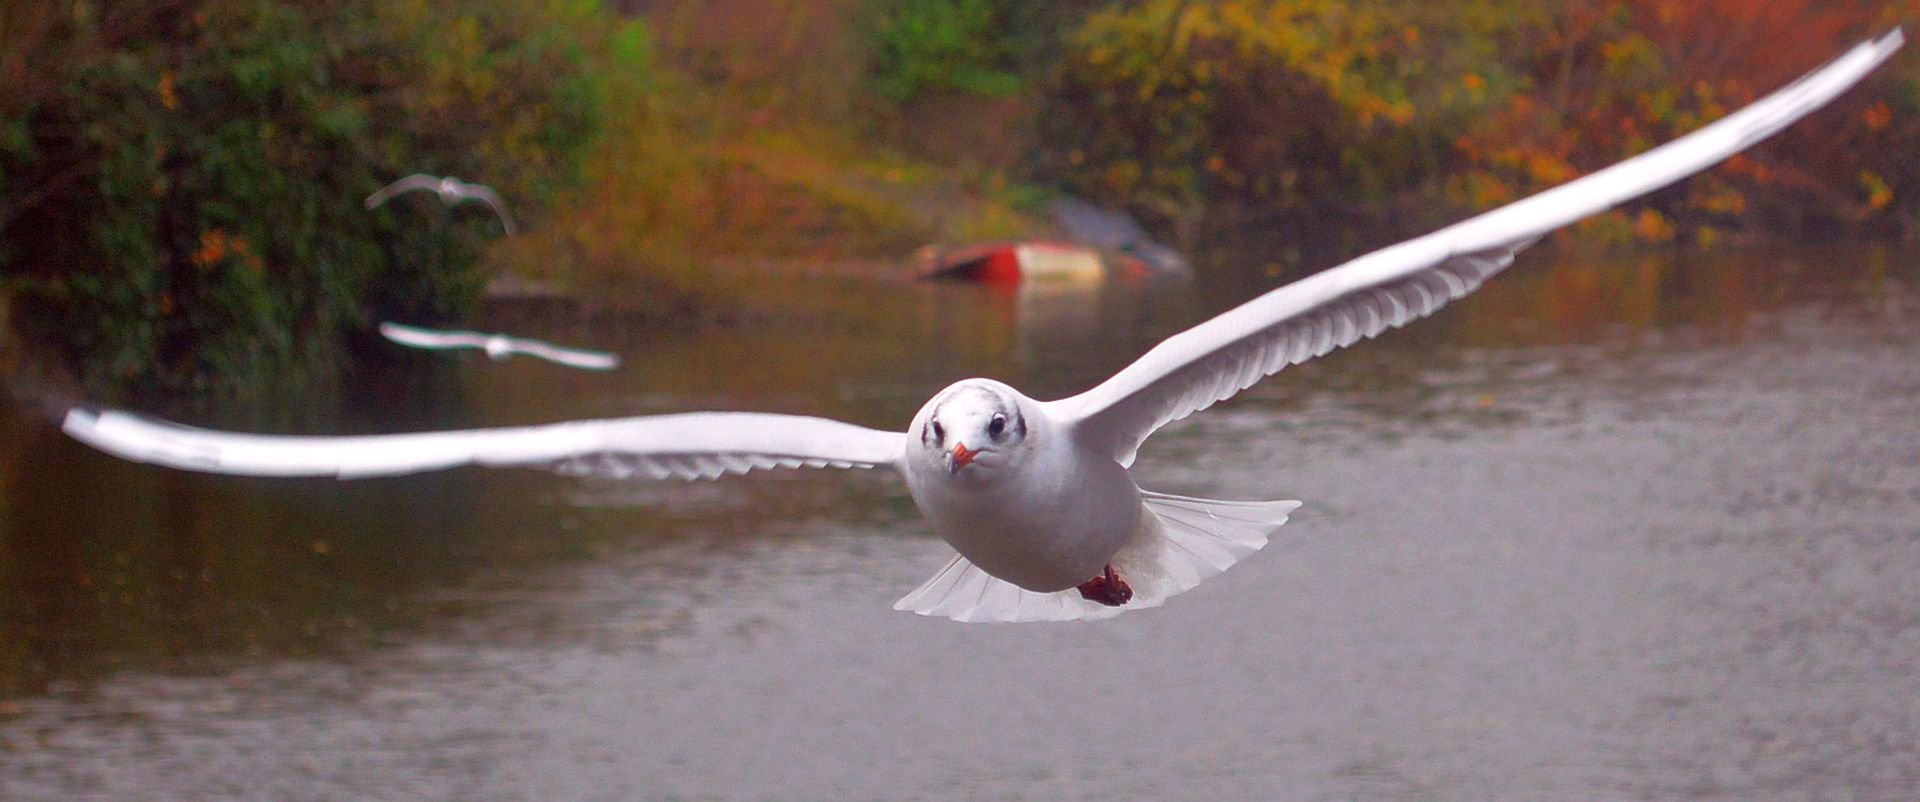 Flight of the gull